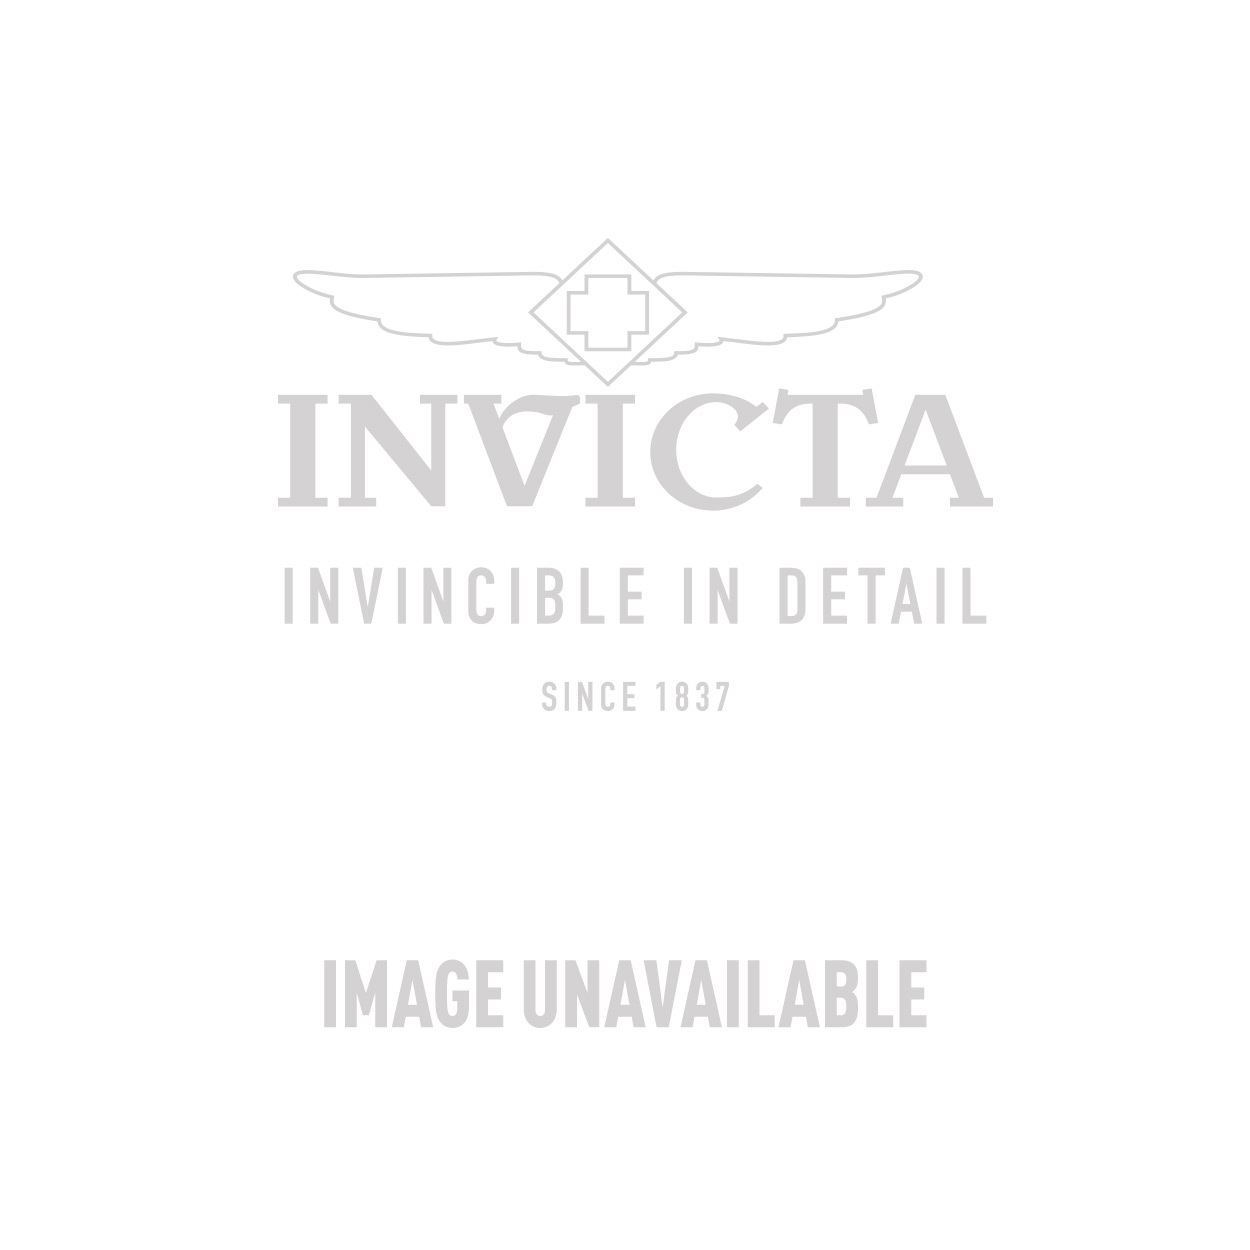 Invicta Speedway Quartz Watch - Stainless Steel case Stainless Steel band - Model 9211